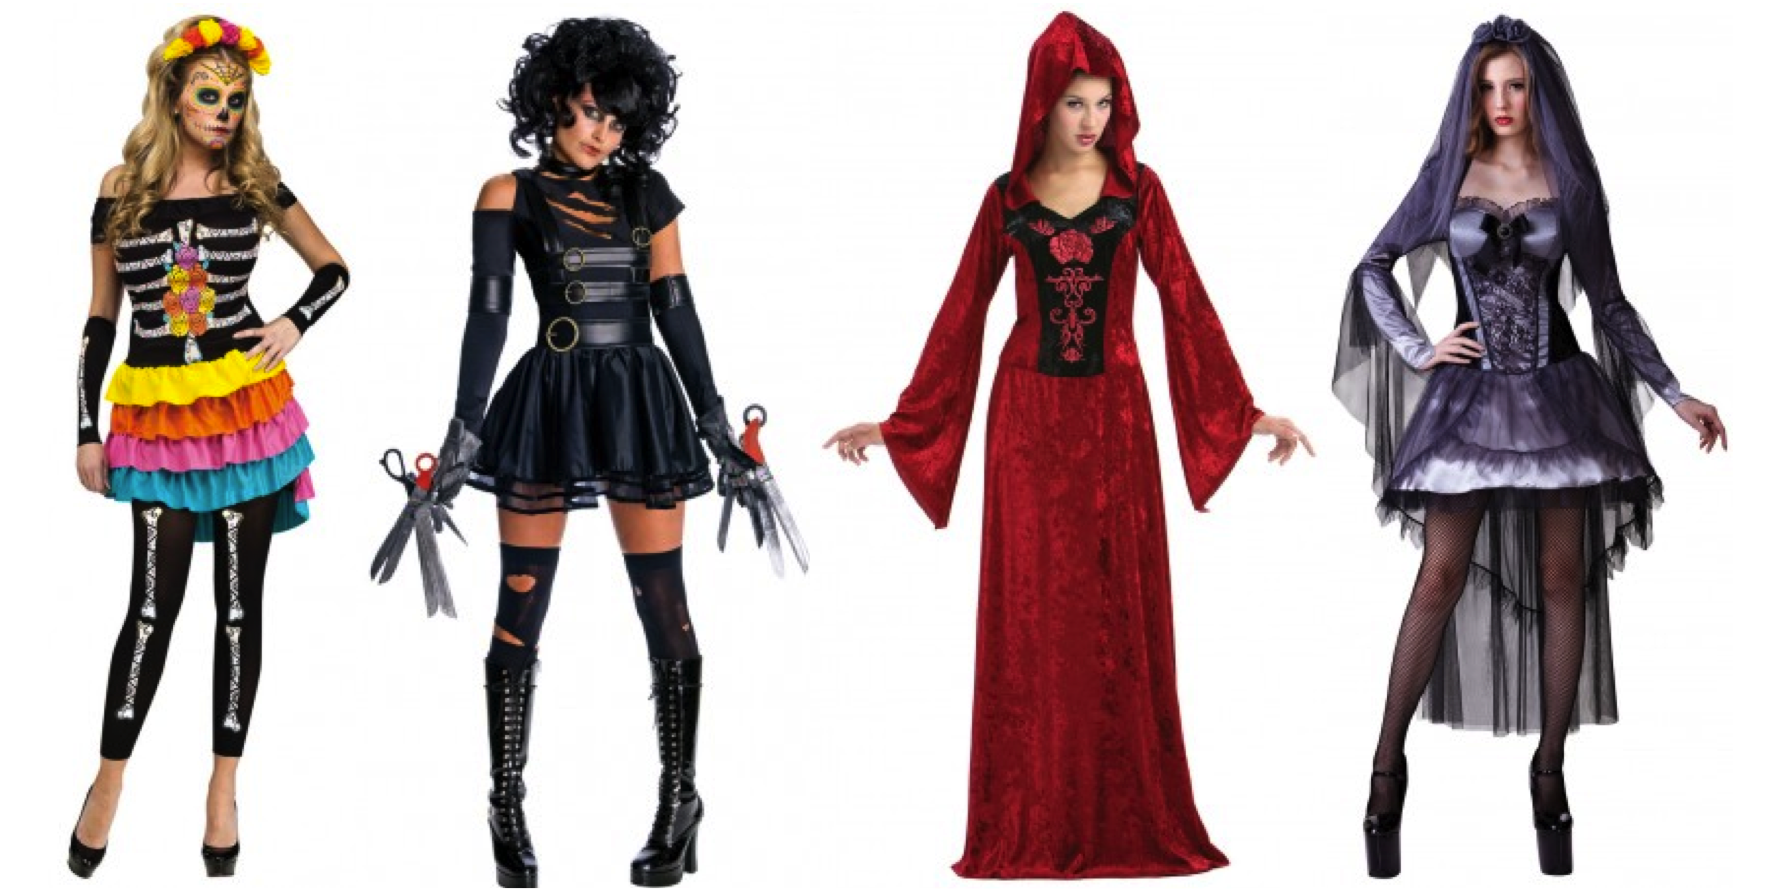 Top Female Halloween Costumes 2015 - Blog